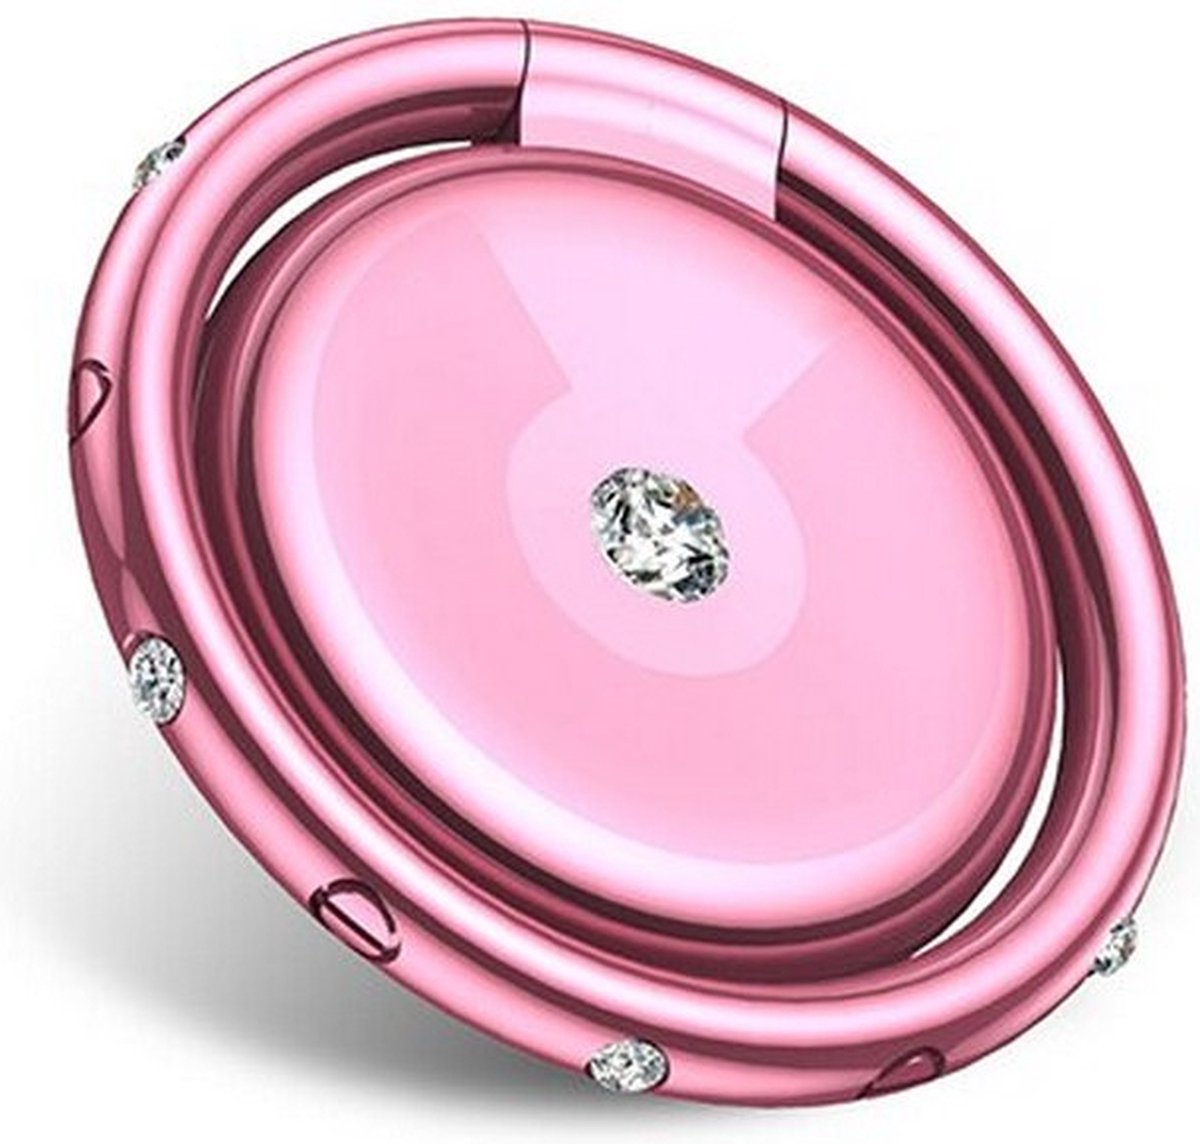 USAMS Diamond Encrusted Ring Holder - Roze